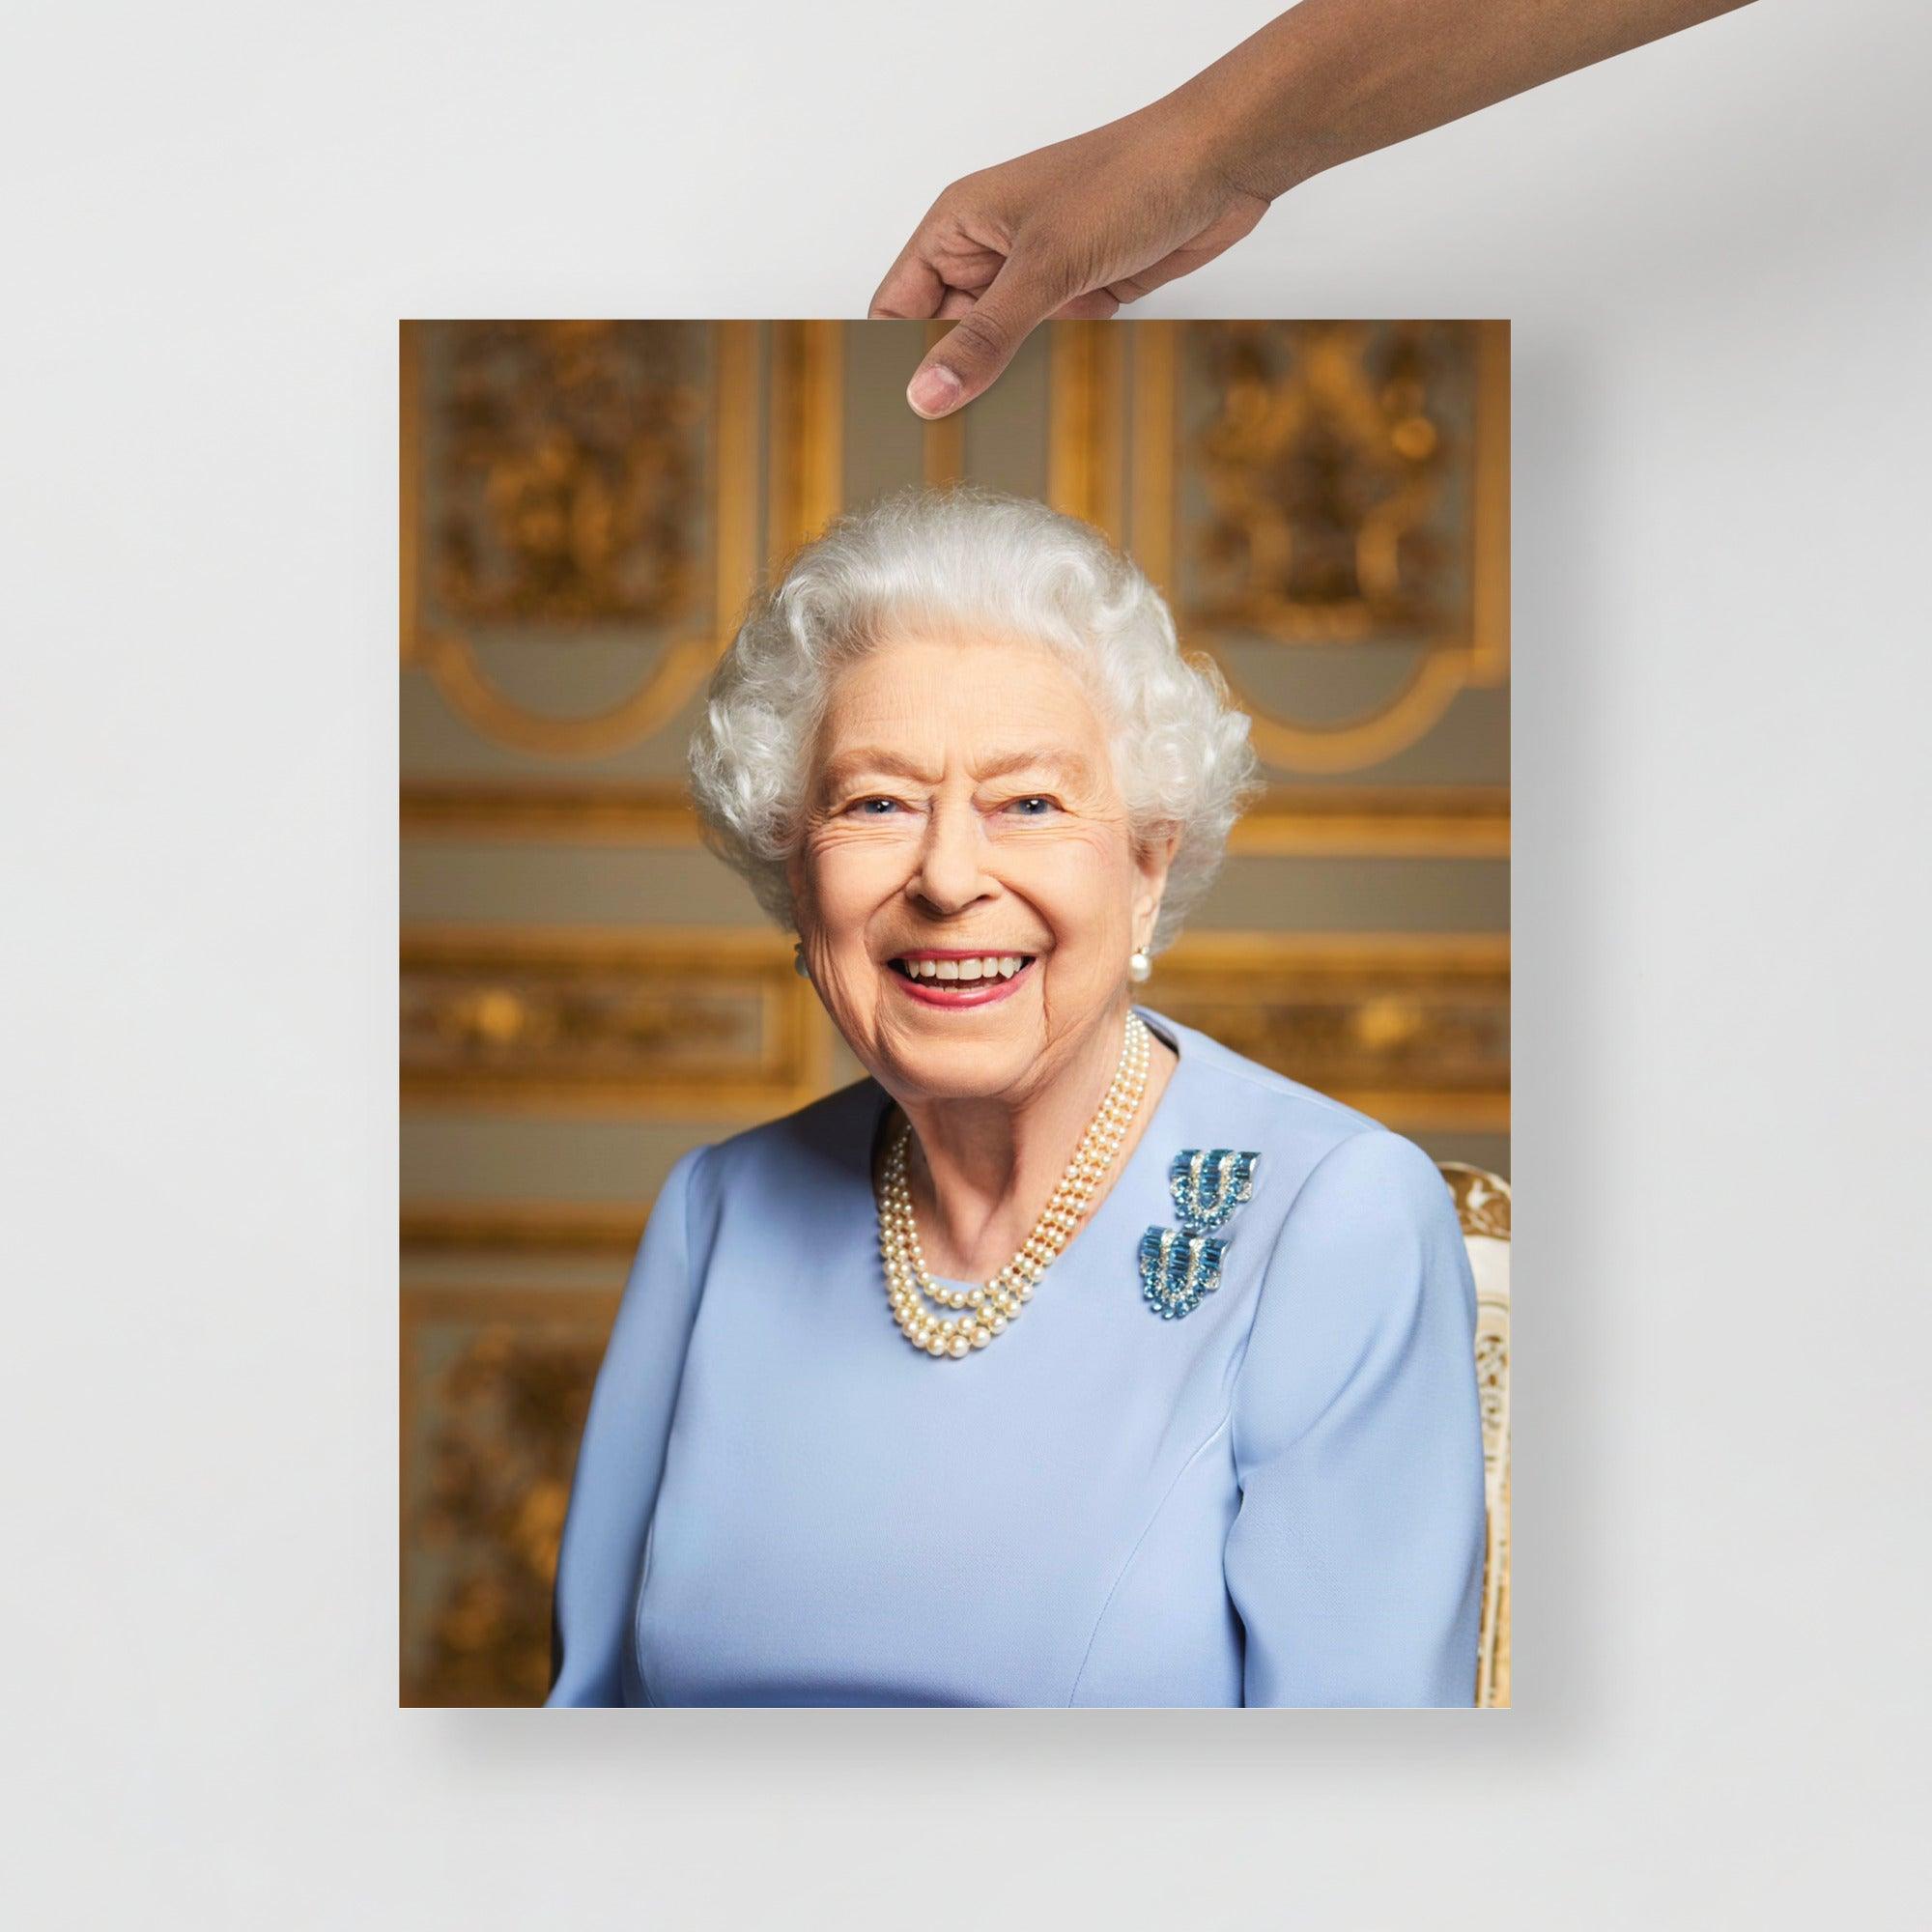 A Platinum Jubilee of Elizabeth II Official Portrait (Posthumous Release) poster on a plain backdrop in size 16x20”.